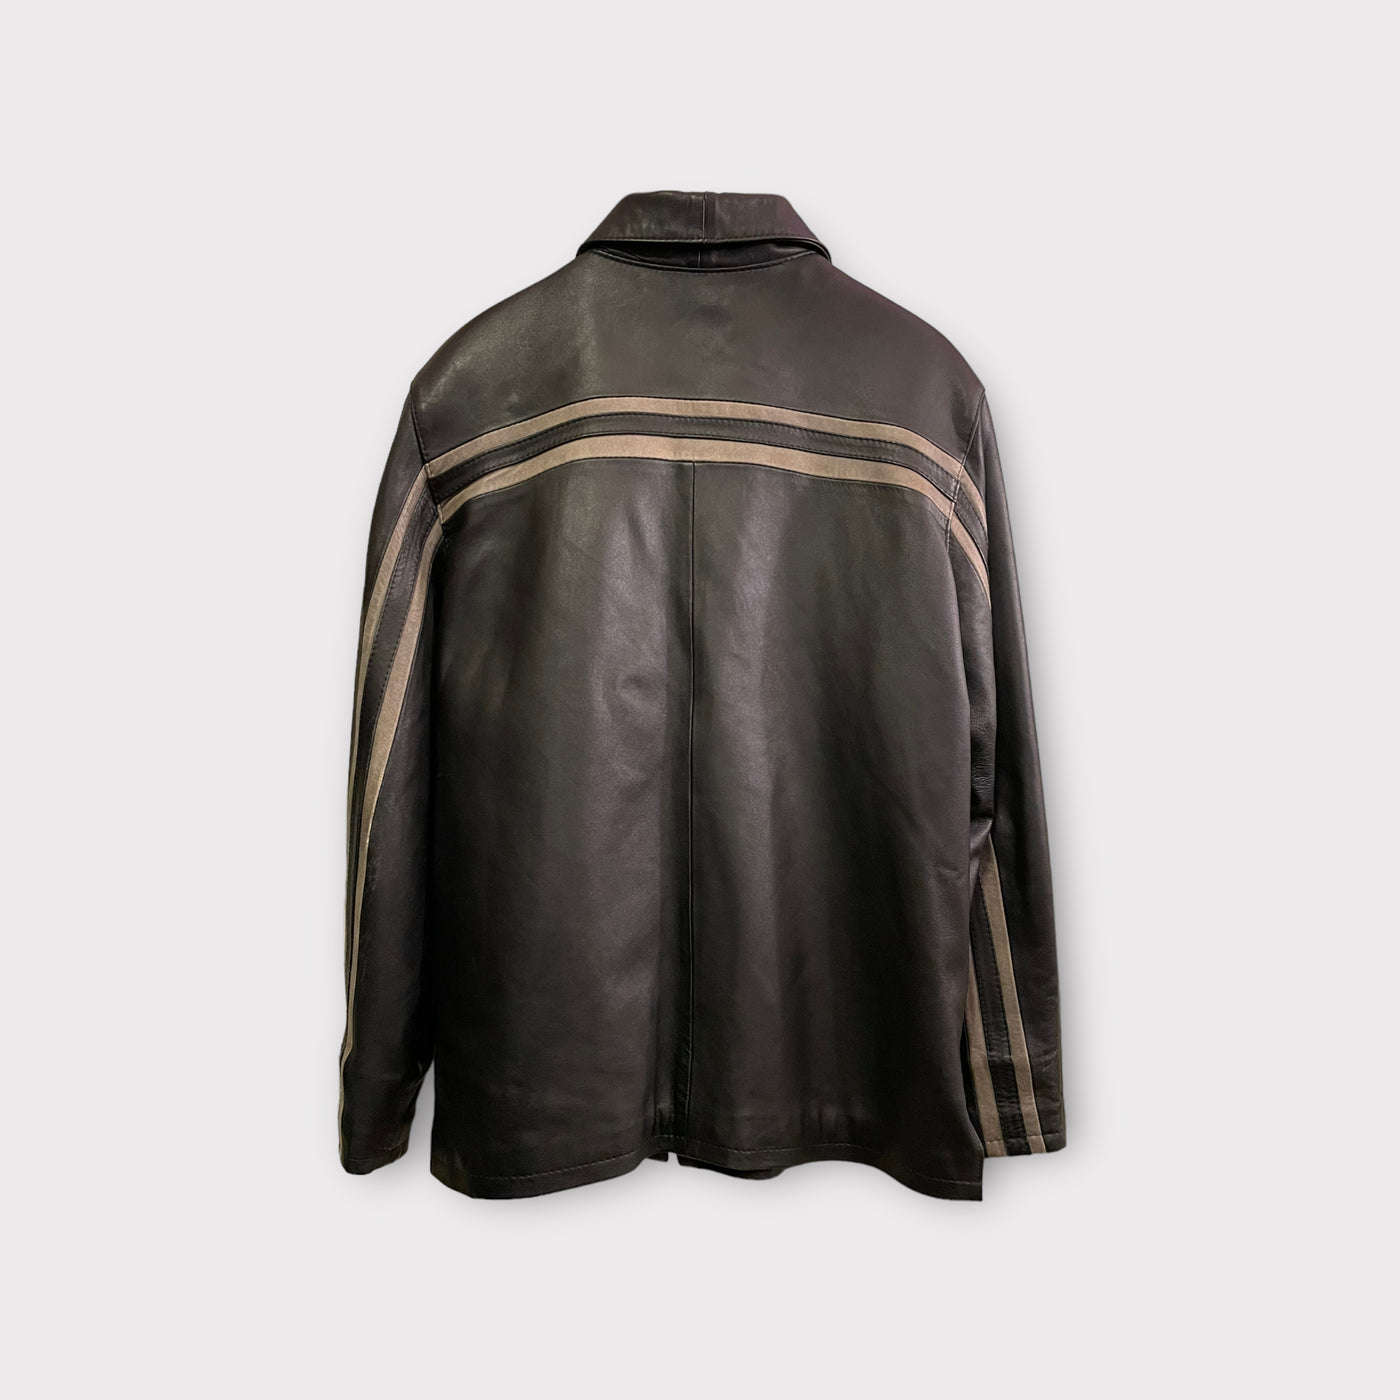 Vintage MC inspired leather jacket